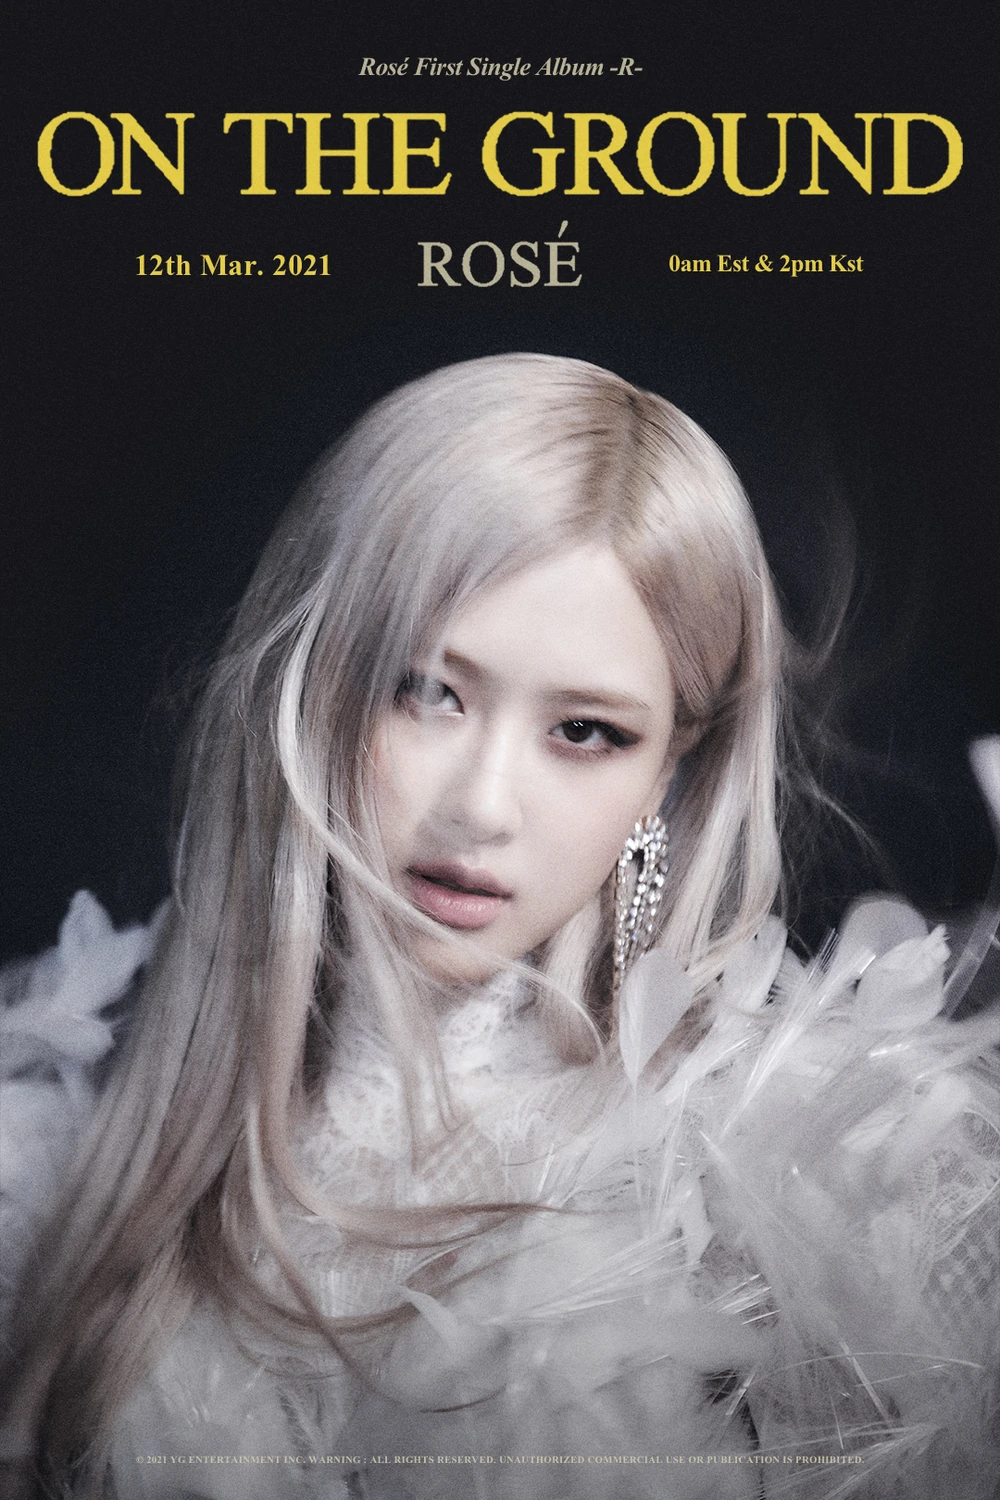 Blackpink -R- Rose Concept Teaser Picture Image Photo Kpop K-Concept 4